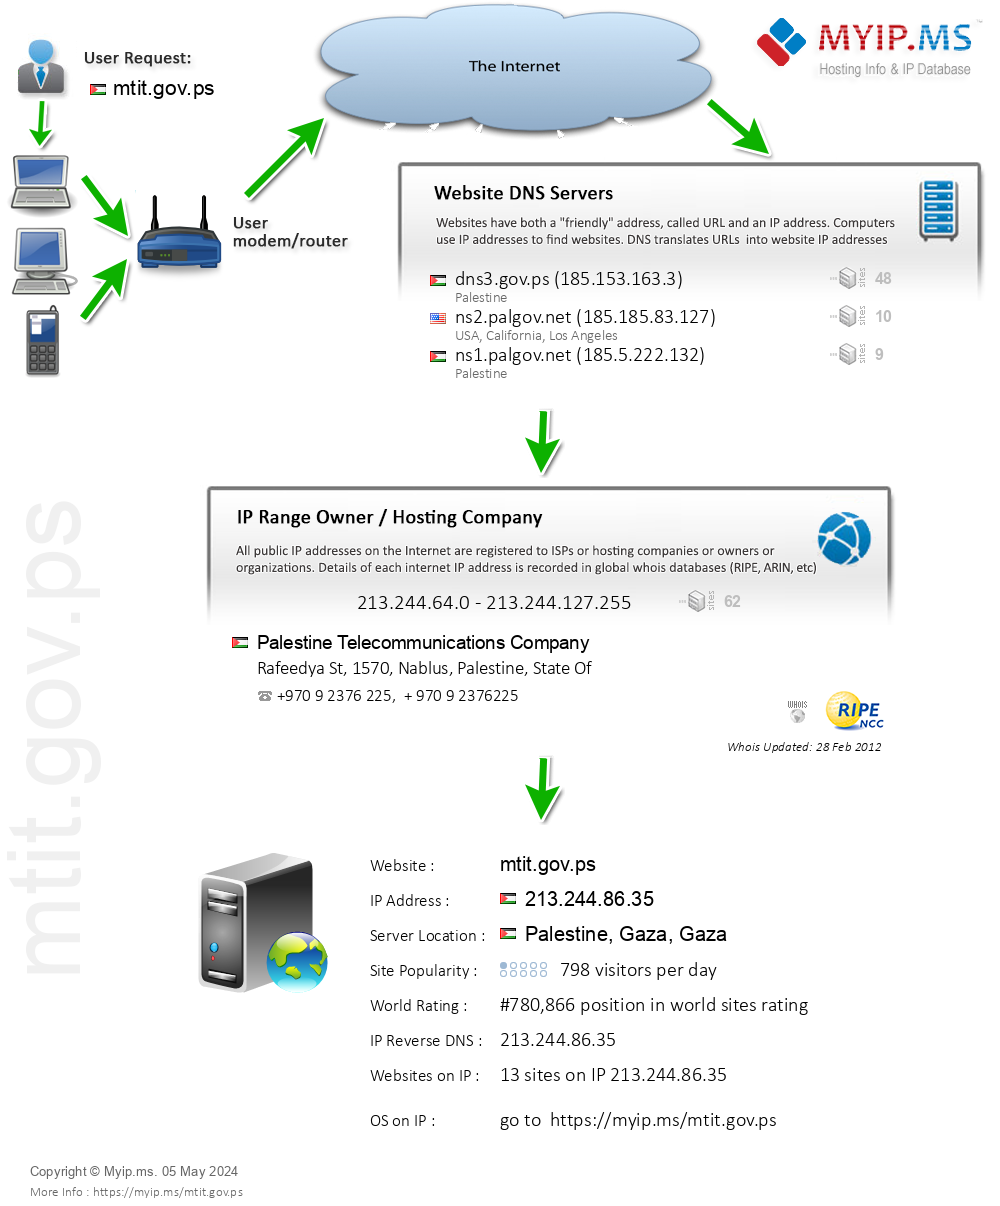 Mtit.gov.ps - Website Hosting Visual IP Diagram